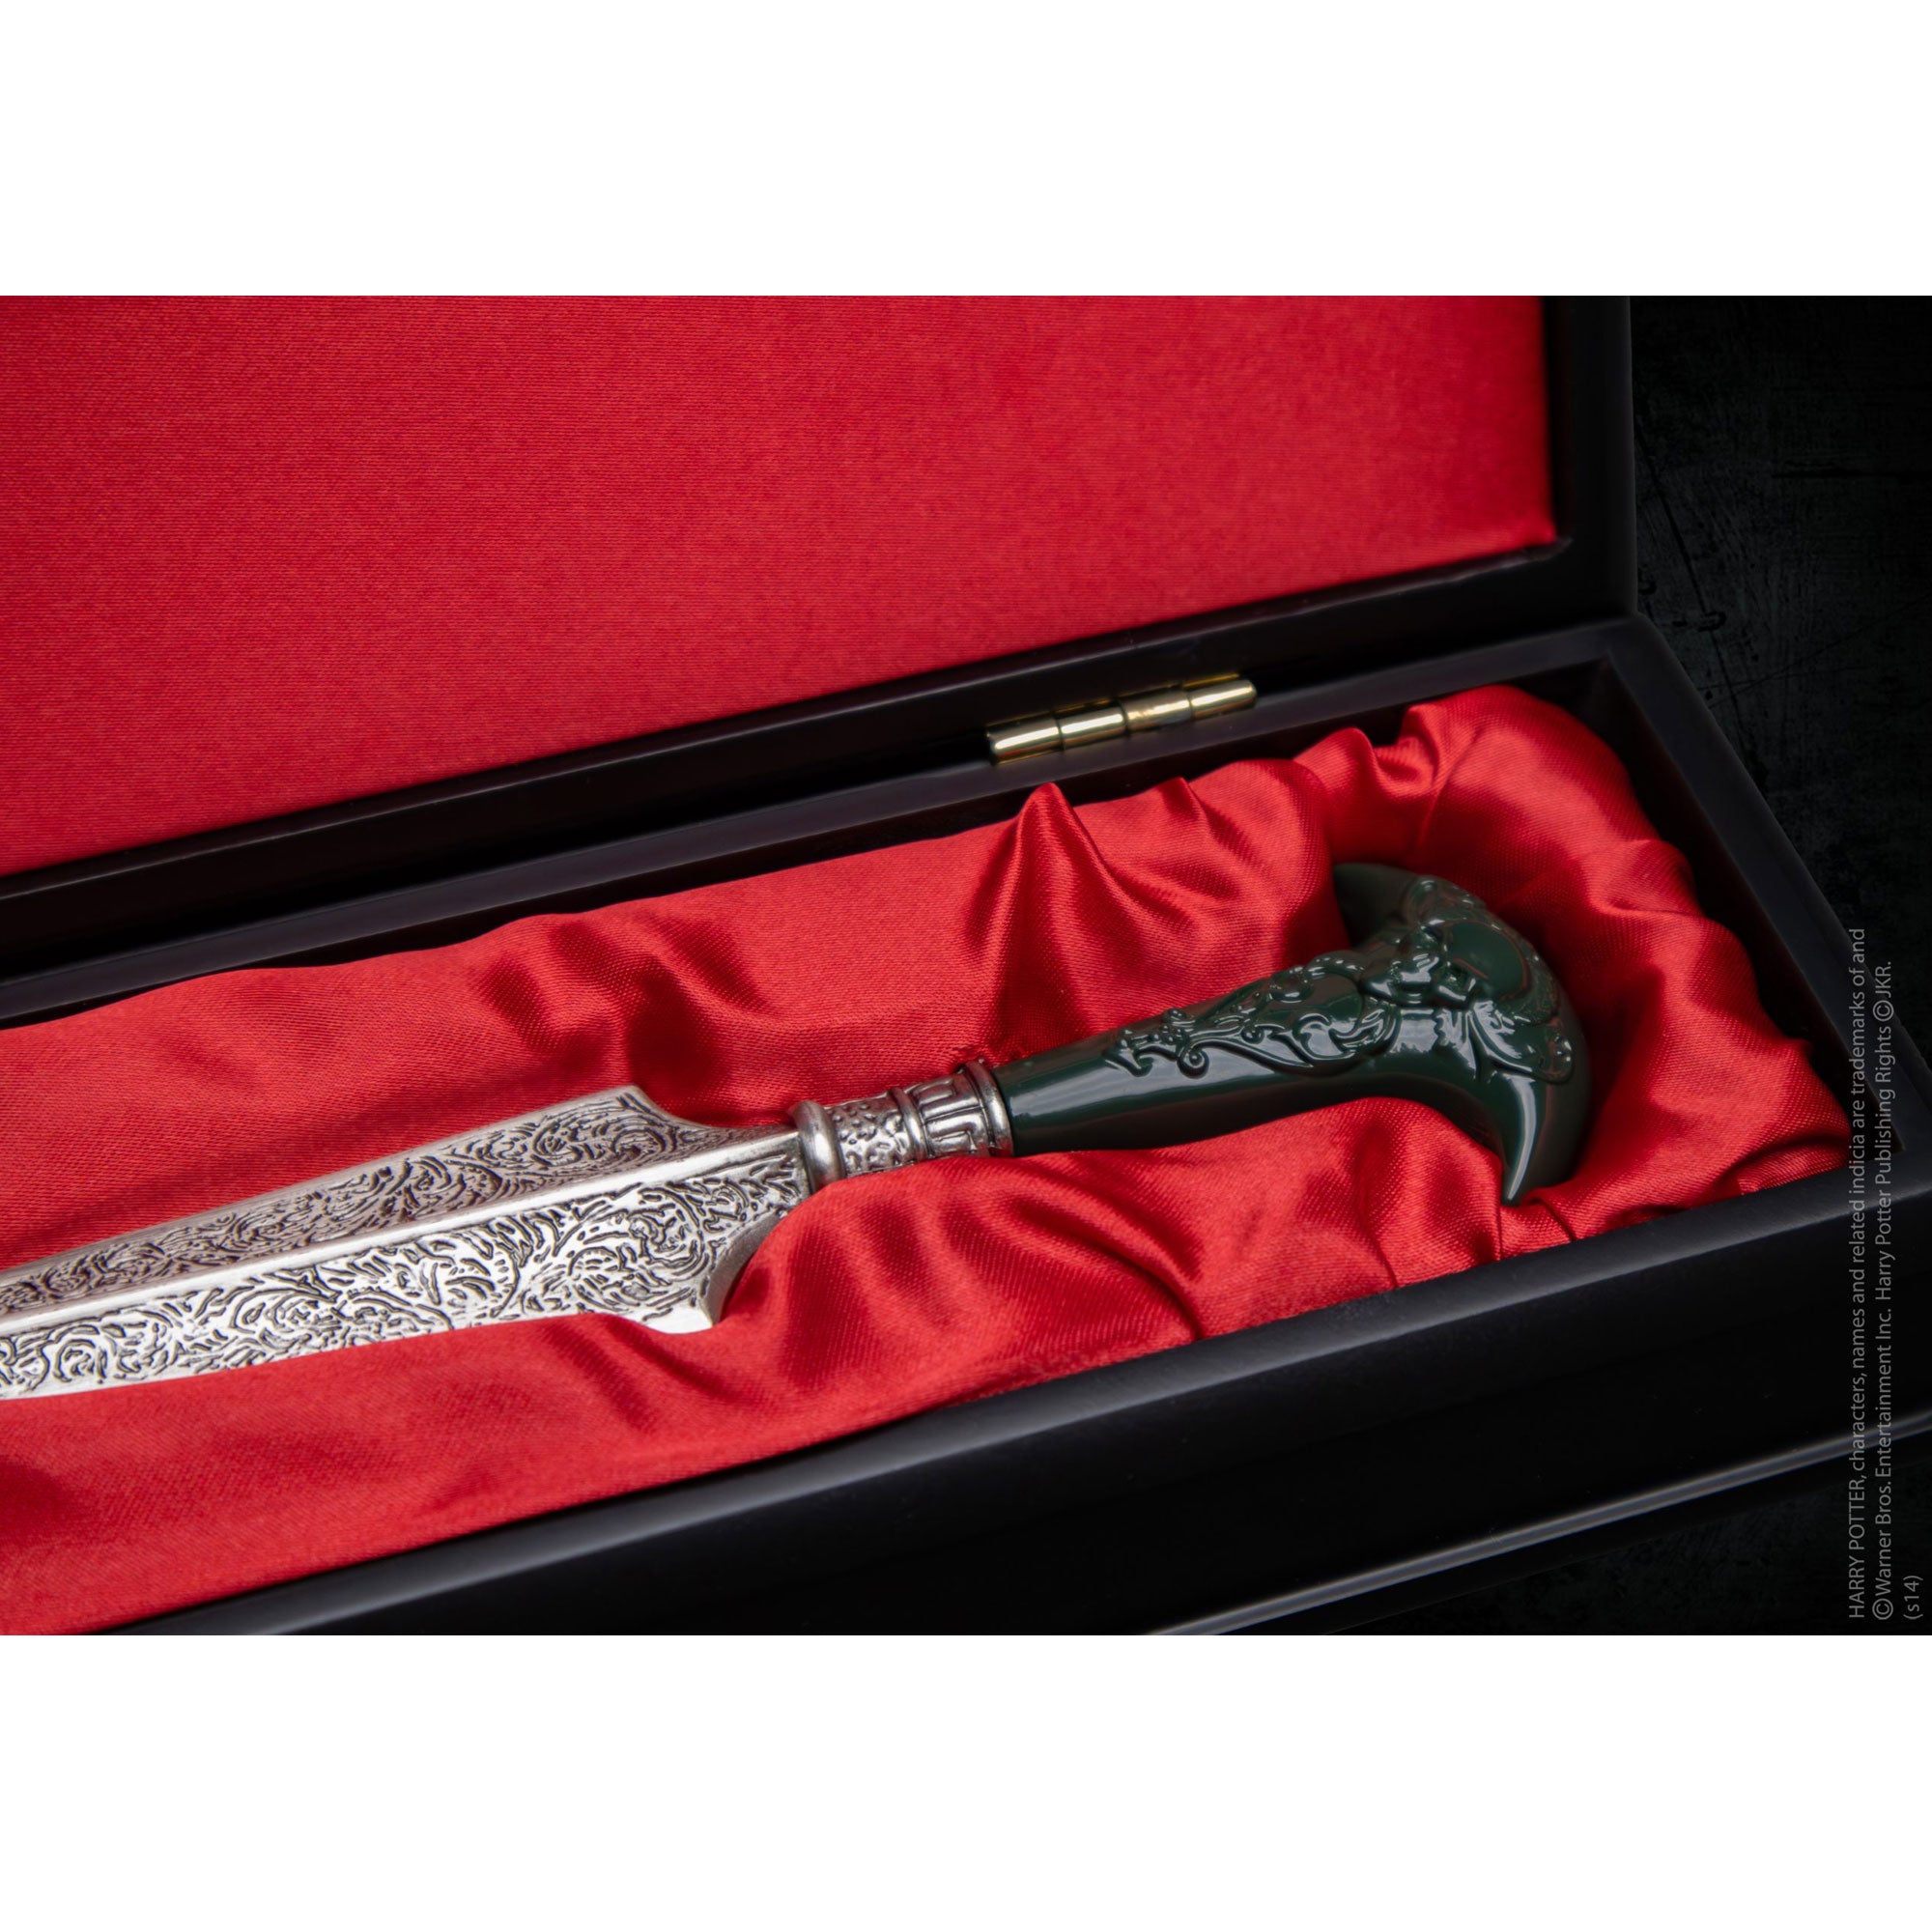 Bellatrix Lestrange's Dagger